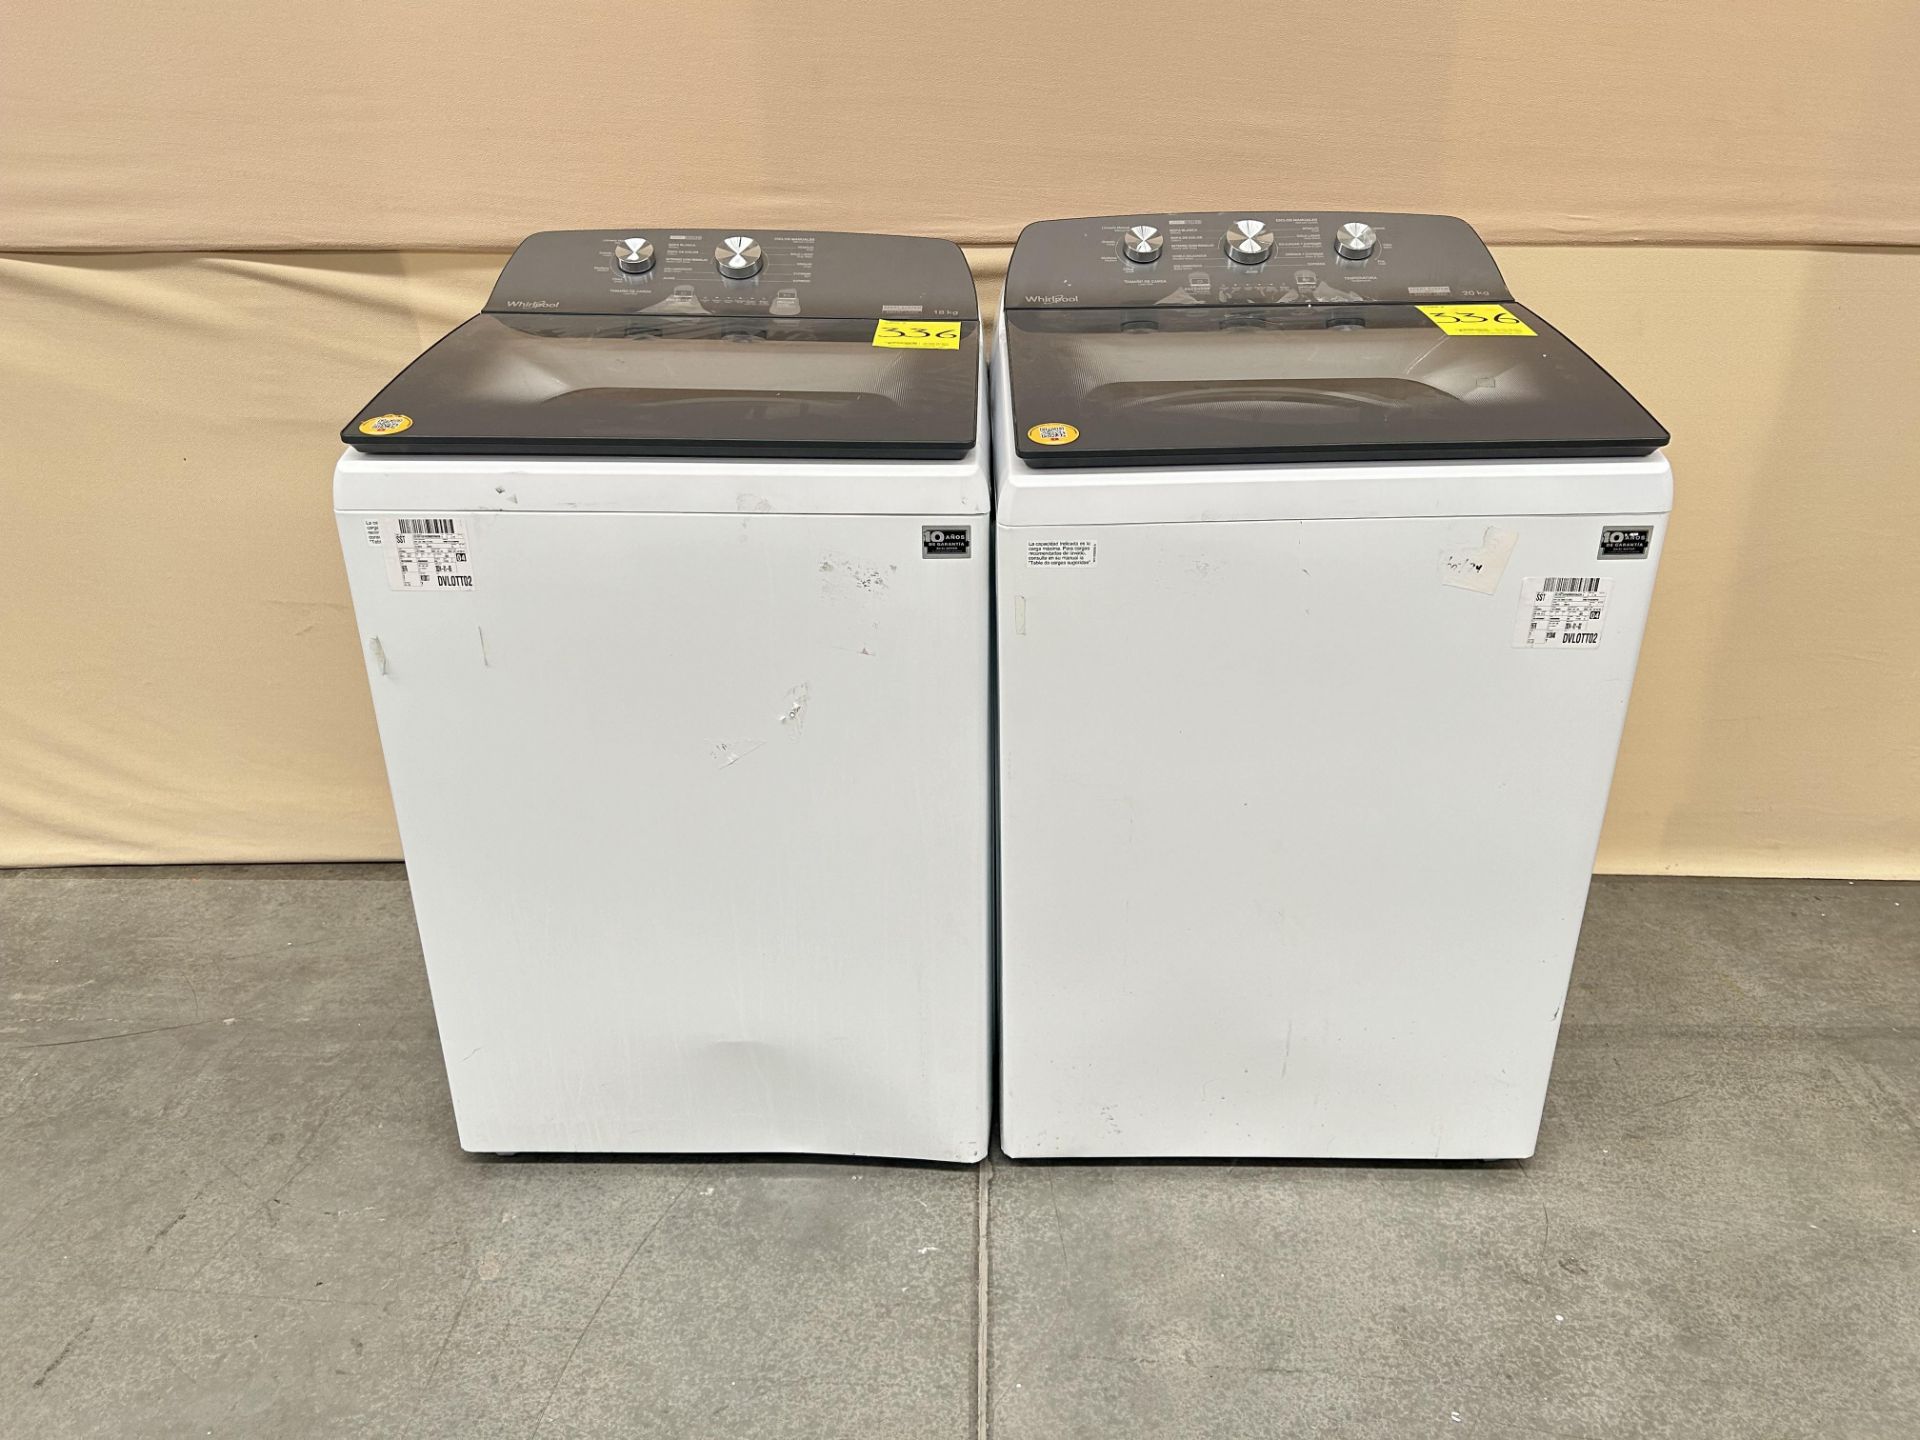 Lote de 2 lavadoras contiene: 1 Lavadora de 20 KG Marca WHIRPOOL, Modelo 8MWTW2023WPM0, Serie 78326